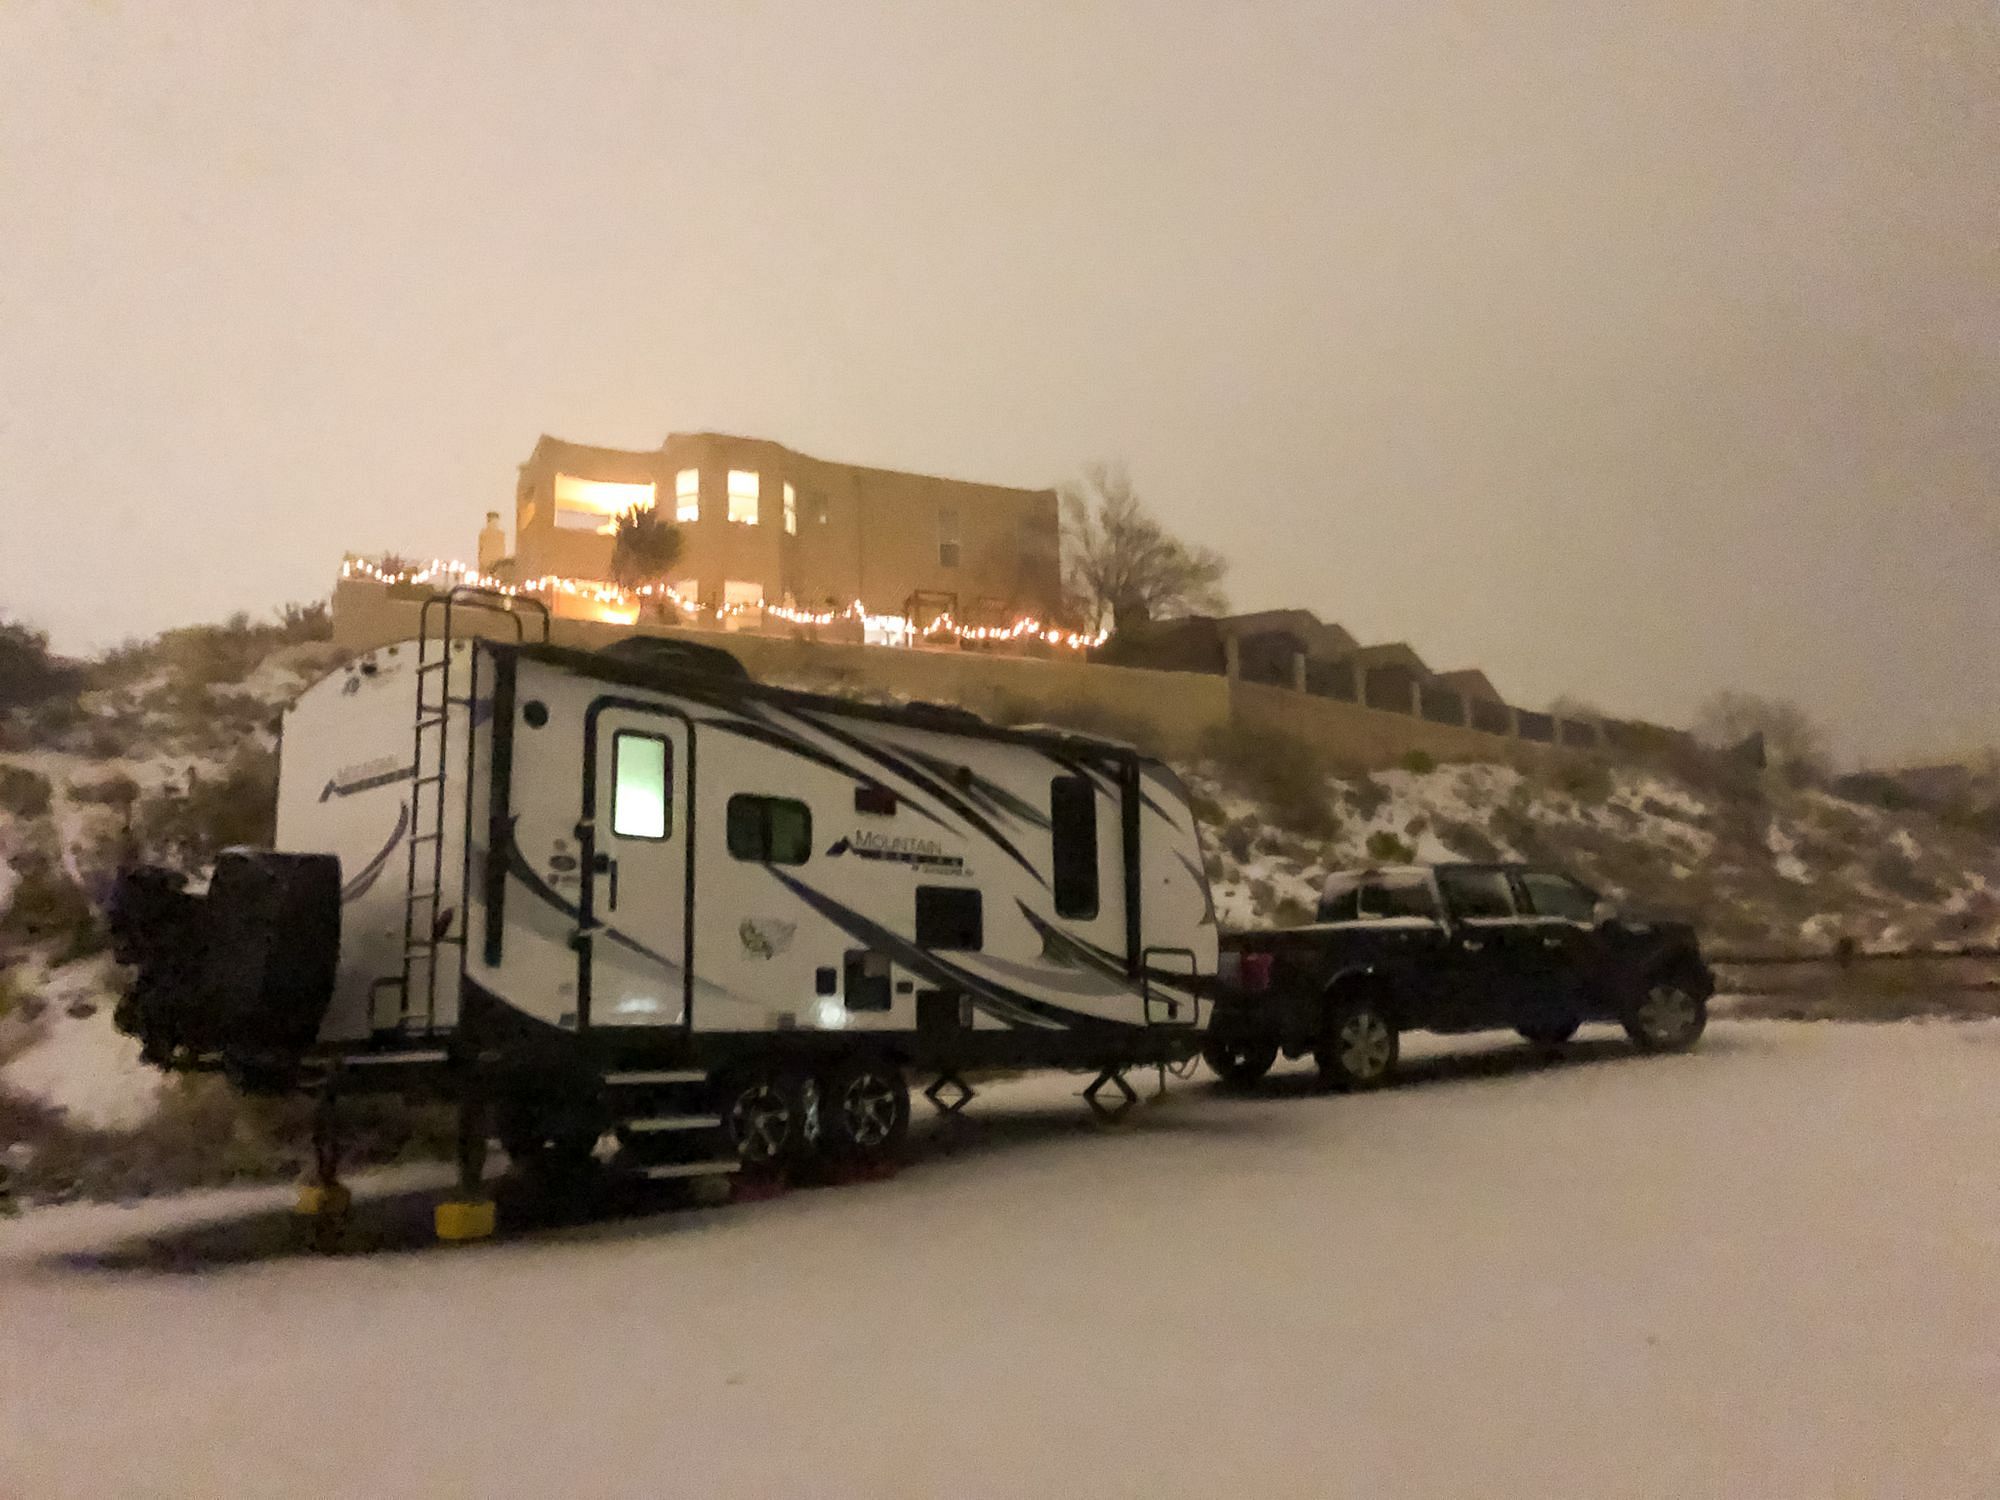 RV in Snow